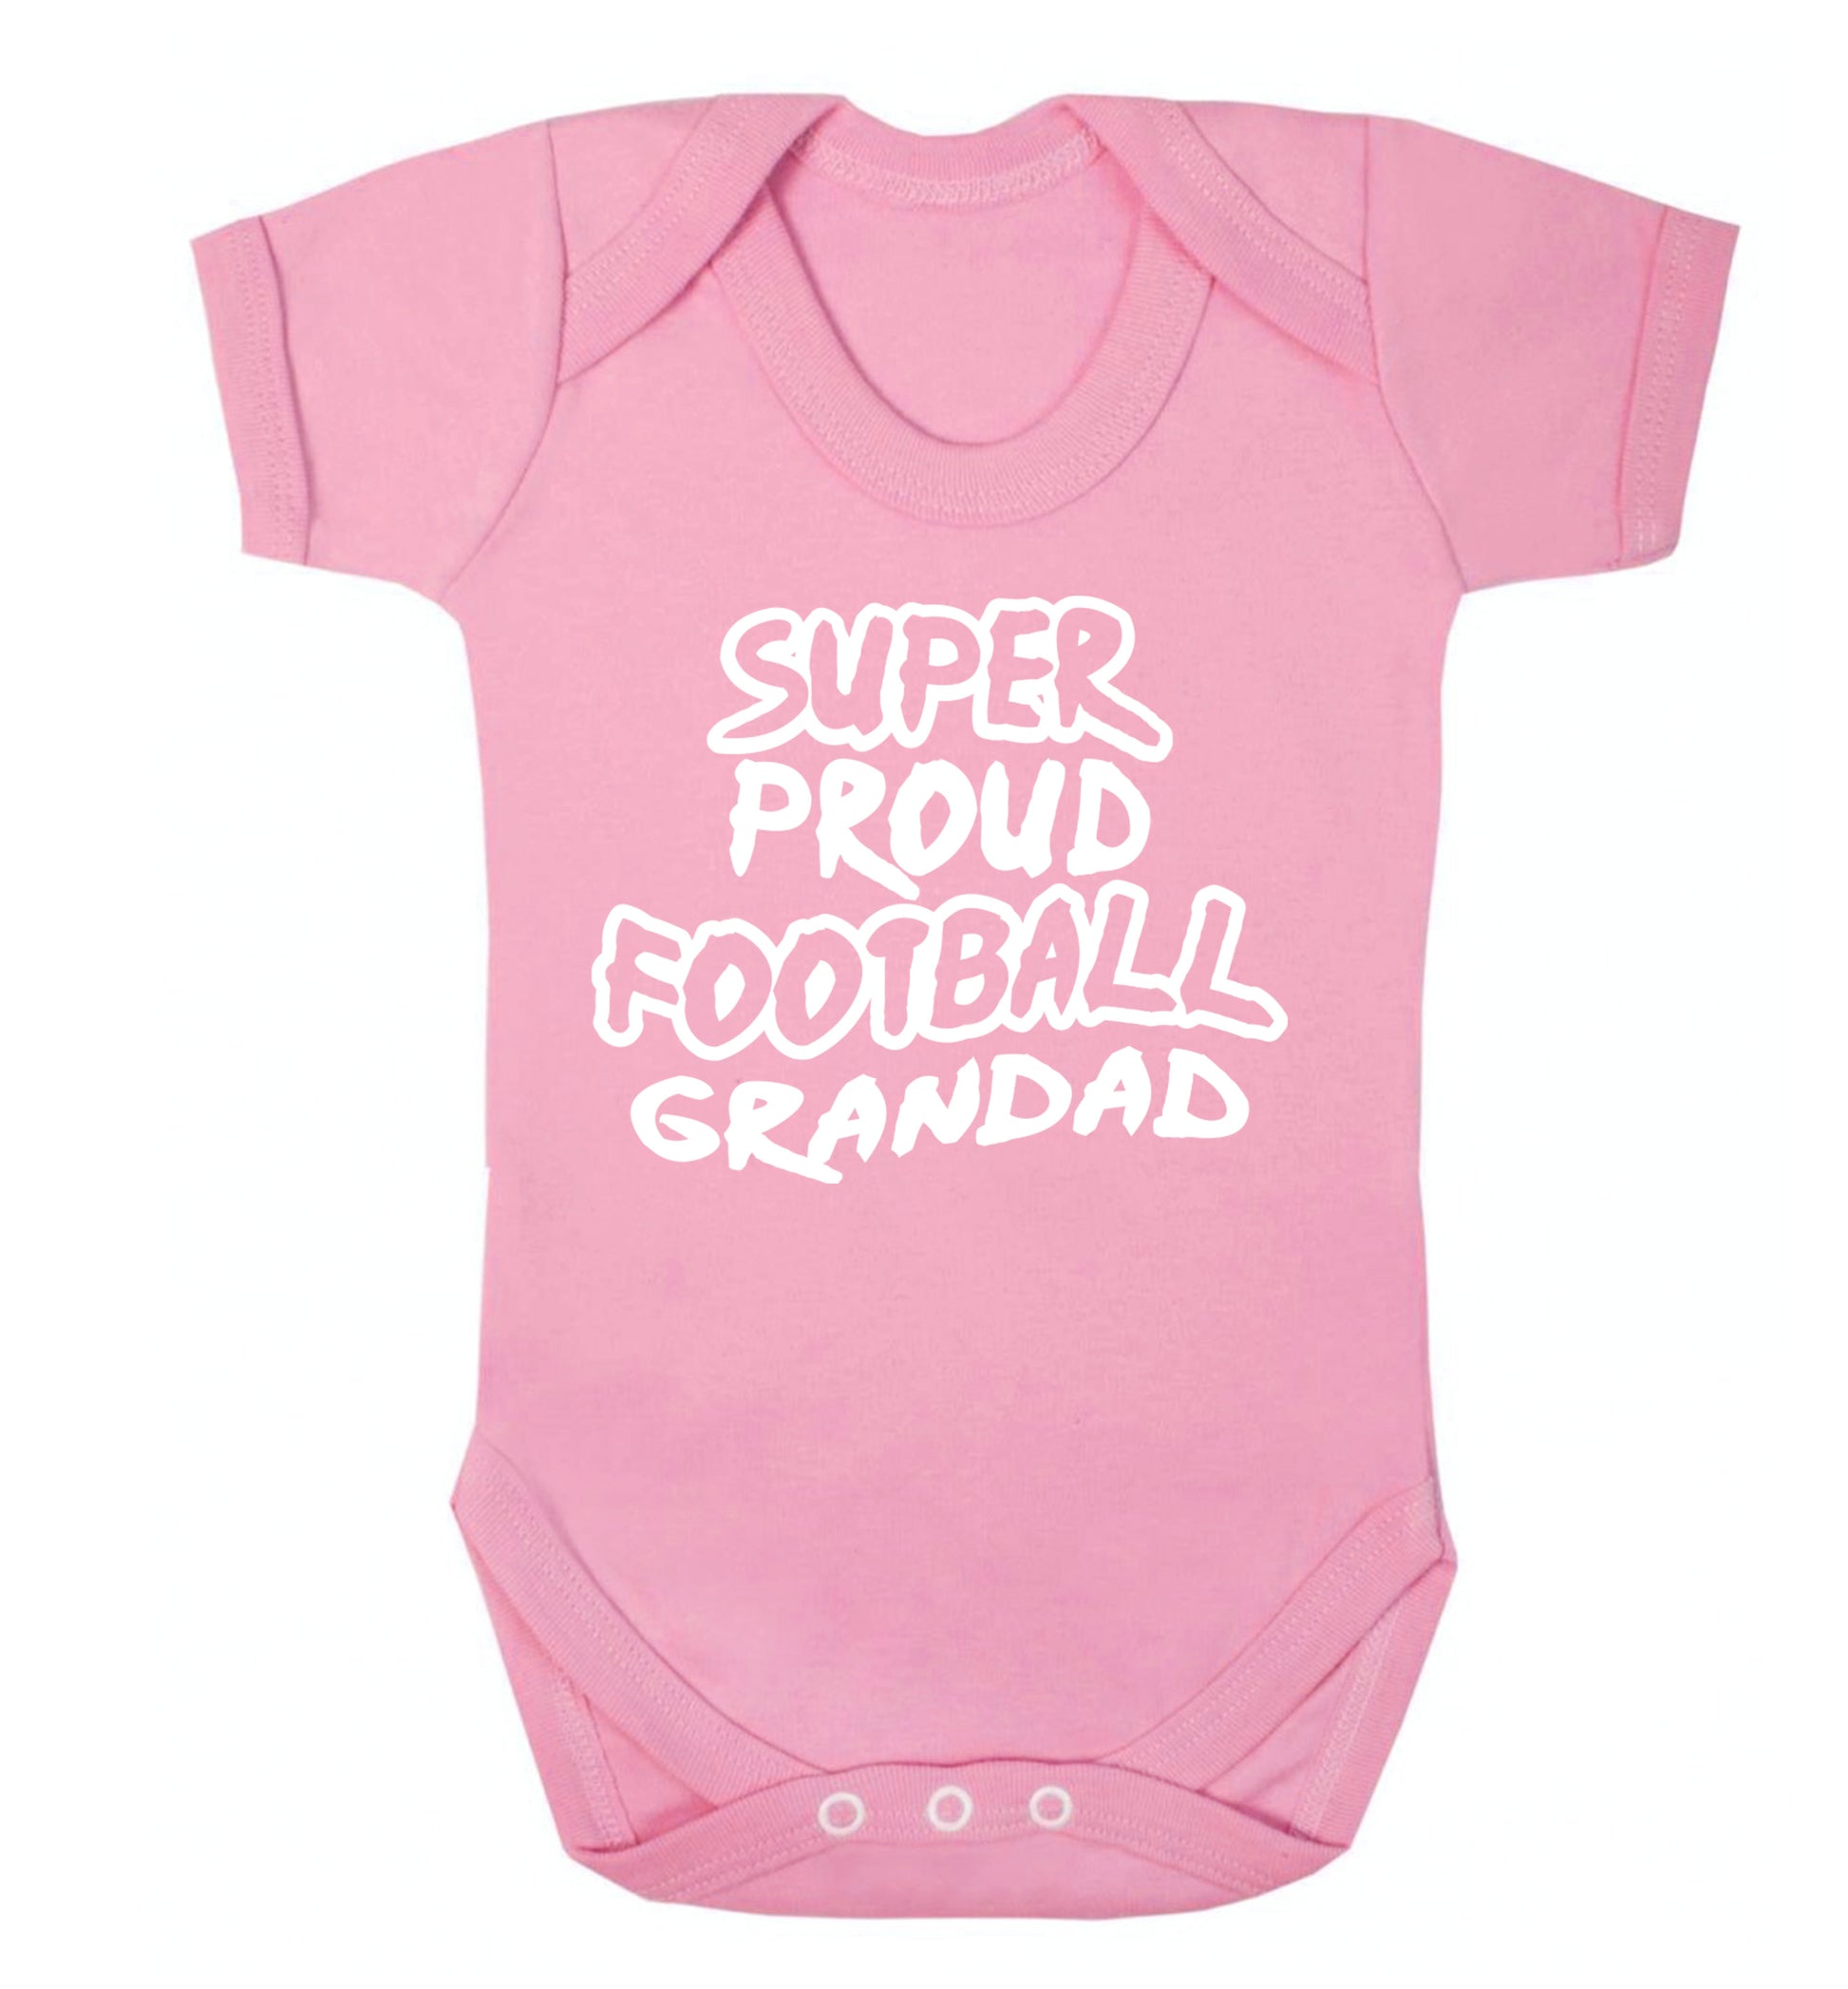 Super proud football grandad Baby Vest pale pink 18-24 months